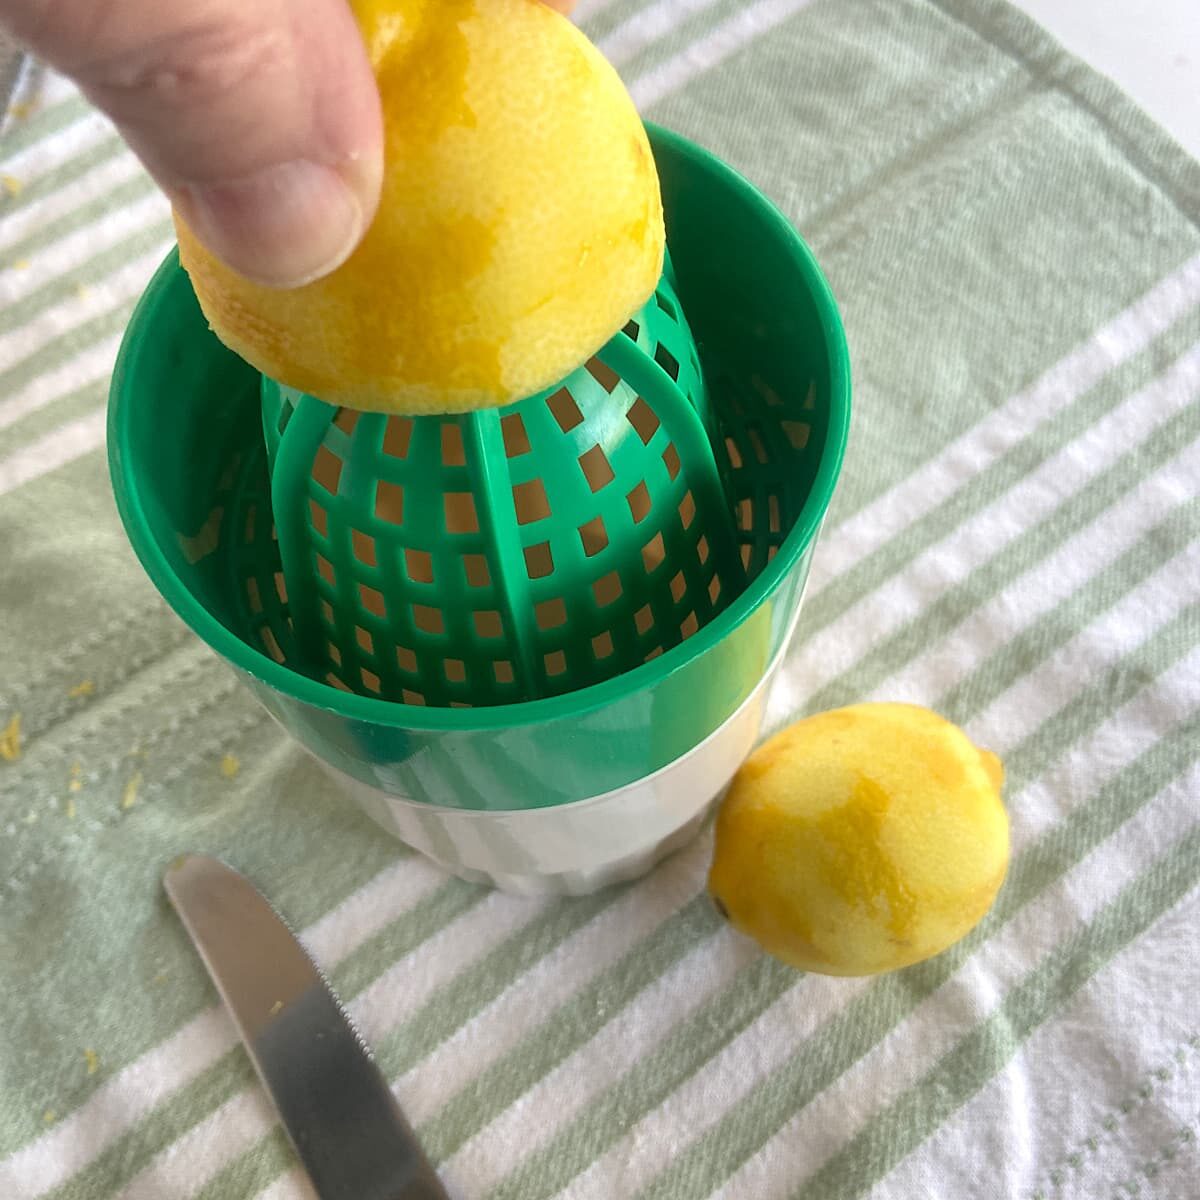 squeeze lemons for juice